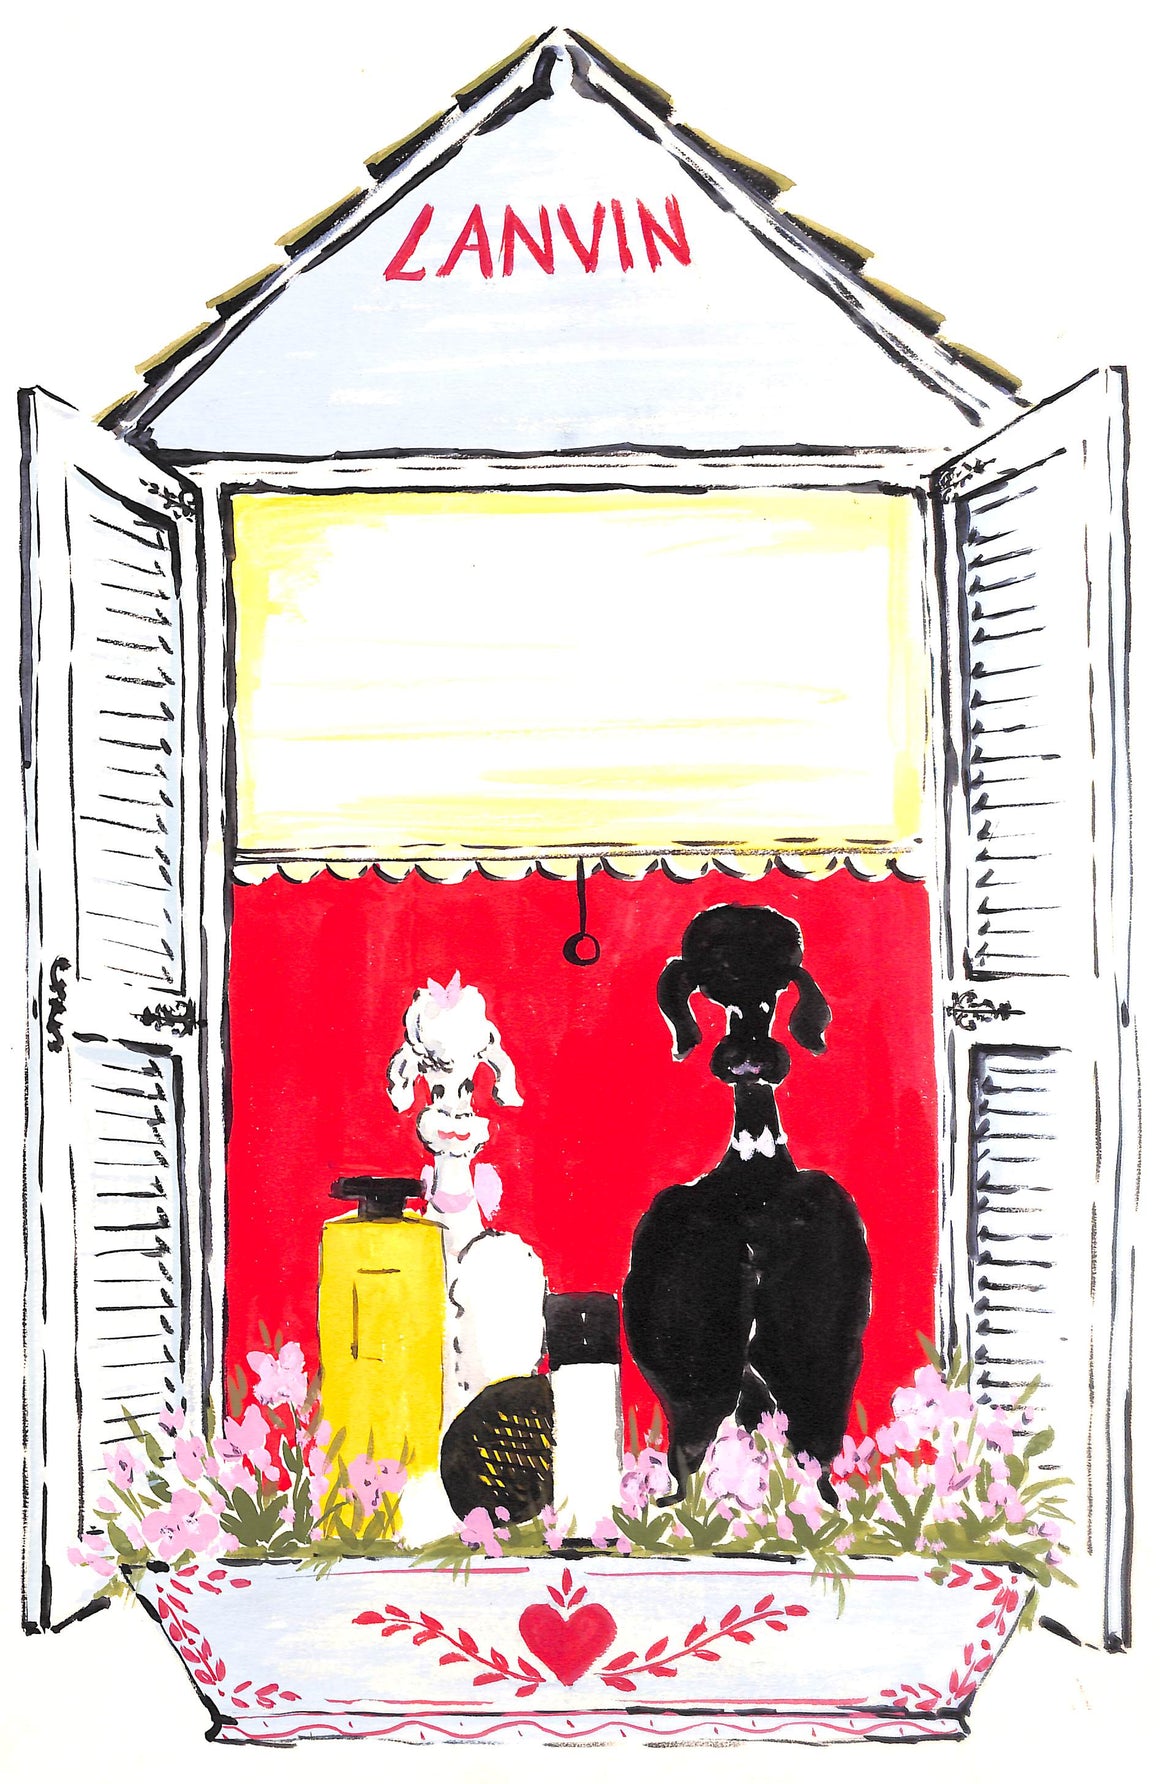 Lanvin Paris Perfume w/ Black & White Poodle On Windowsill c1950s Artwork